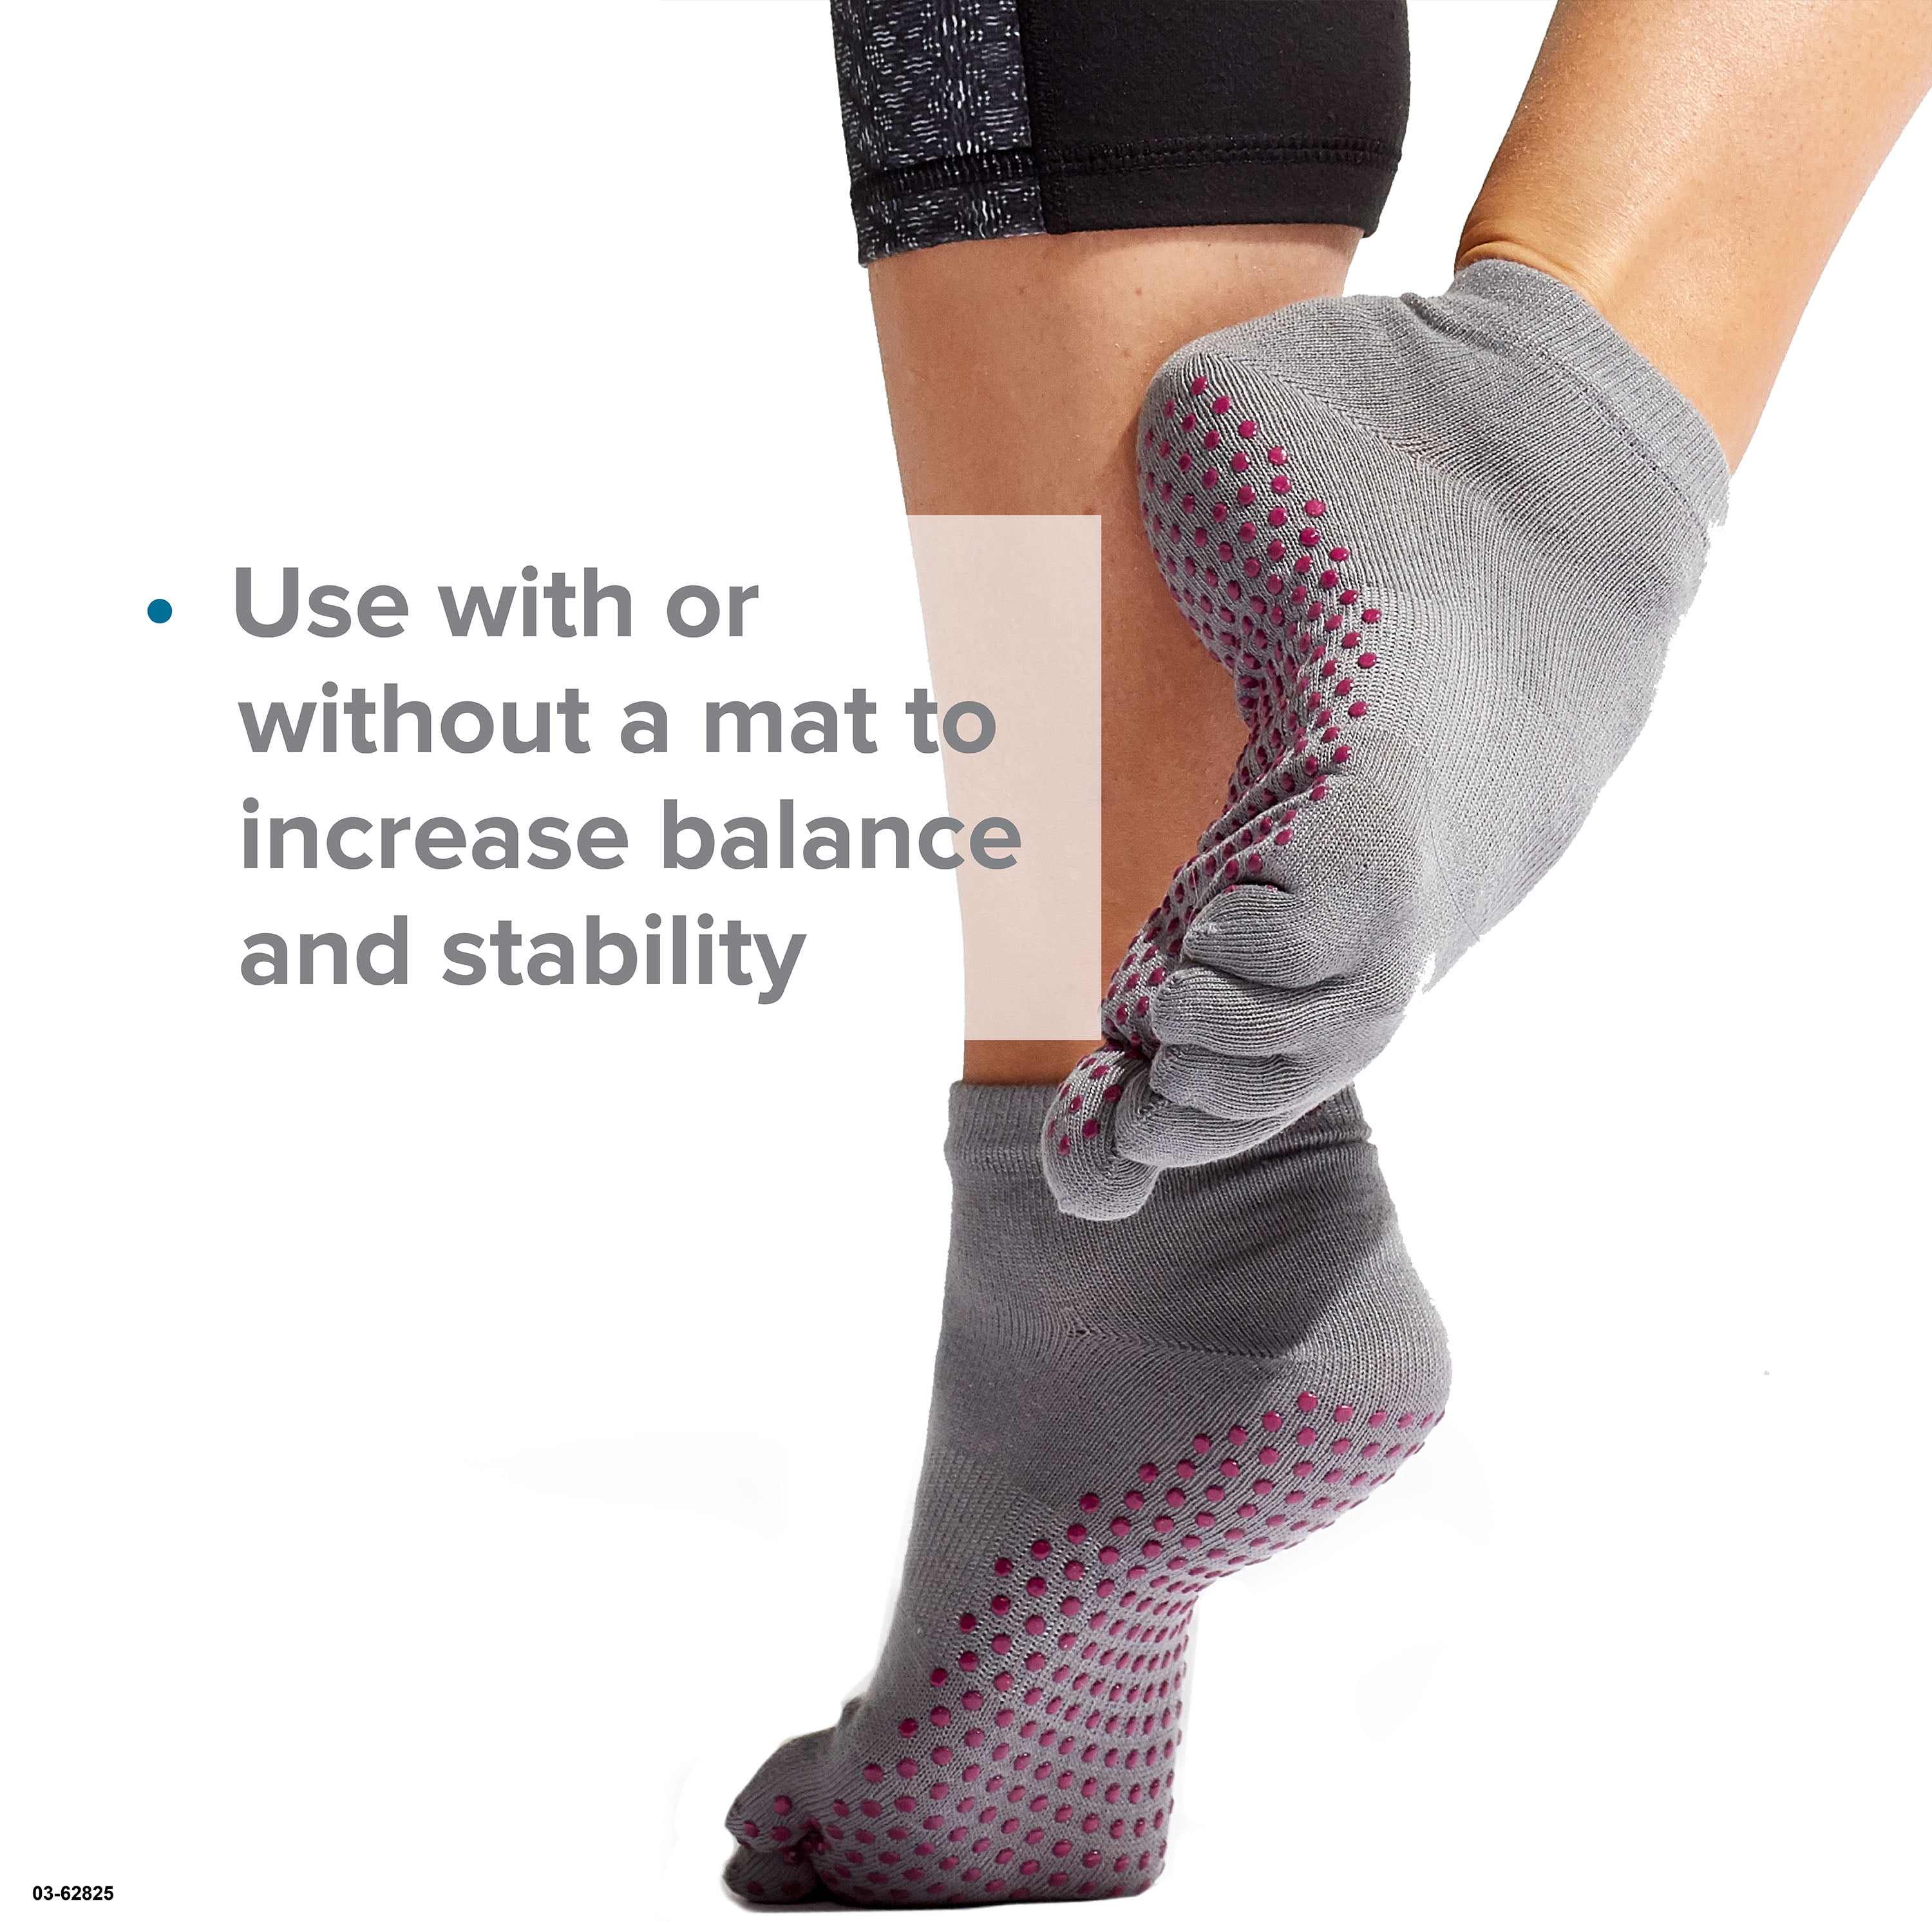 Evolve by Gaiam Toeless Grippy Yoga Socks, 2 Pack, Black and Grey,  Small/Medium